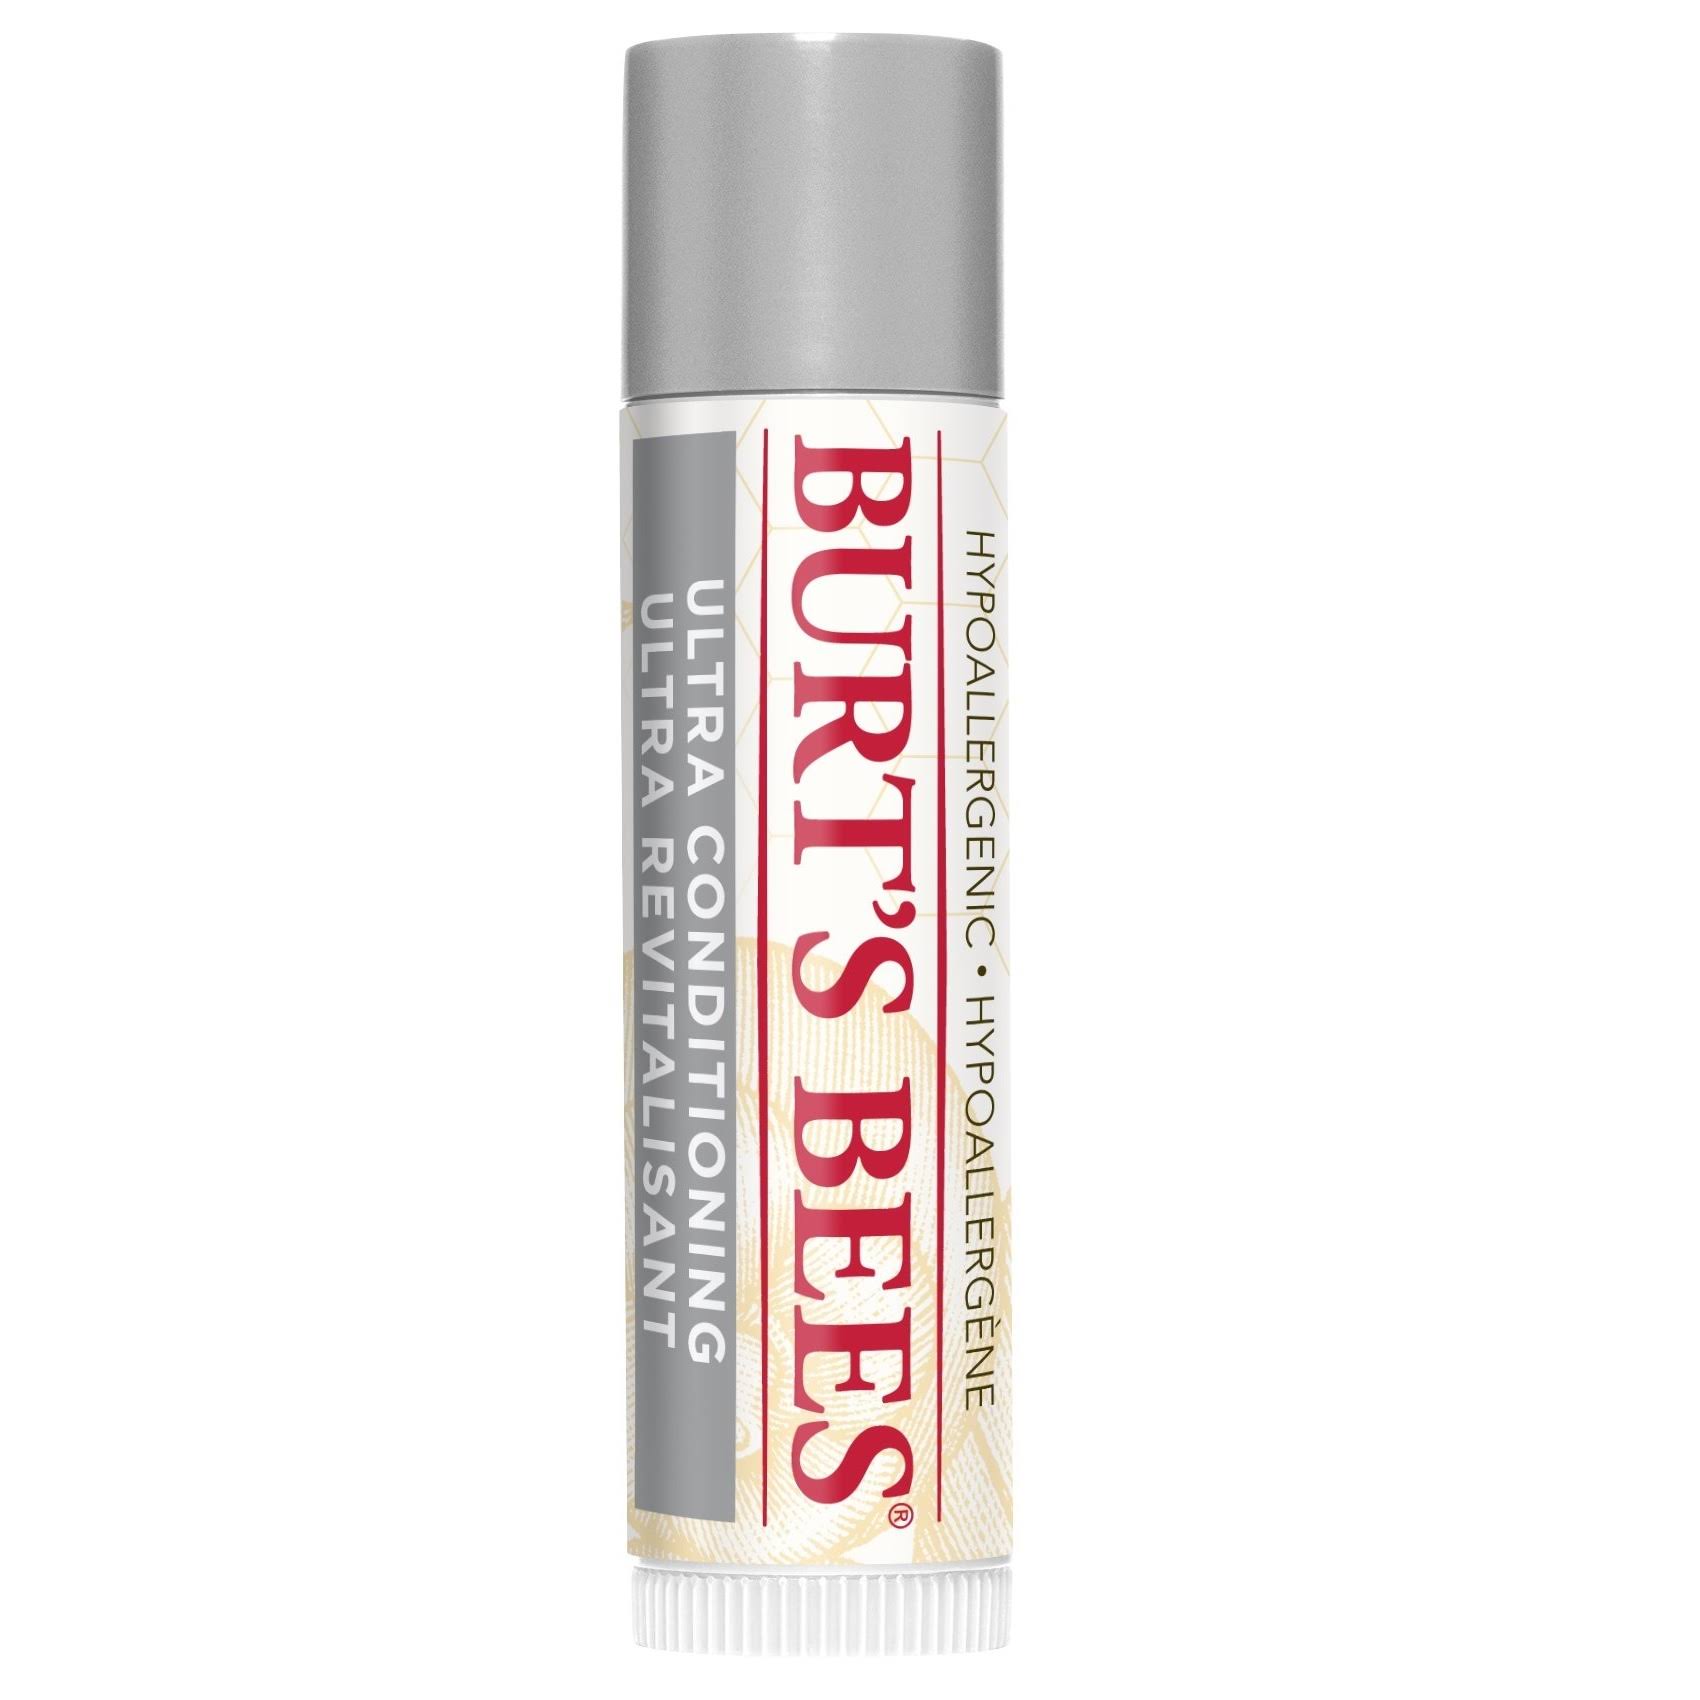 Burt's Bee's Ultra Conditioning Lip Balm - 4.25g, with Kokum Butter